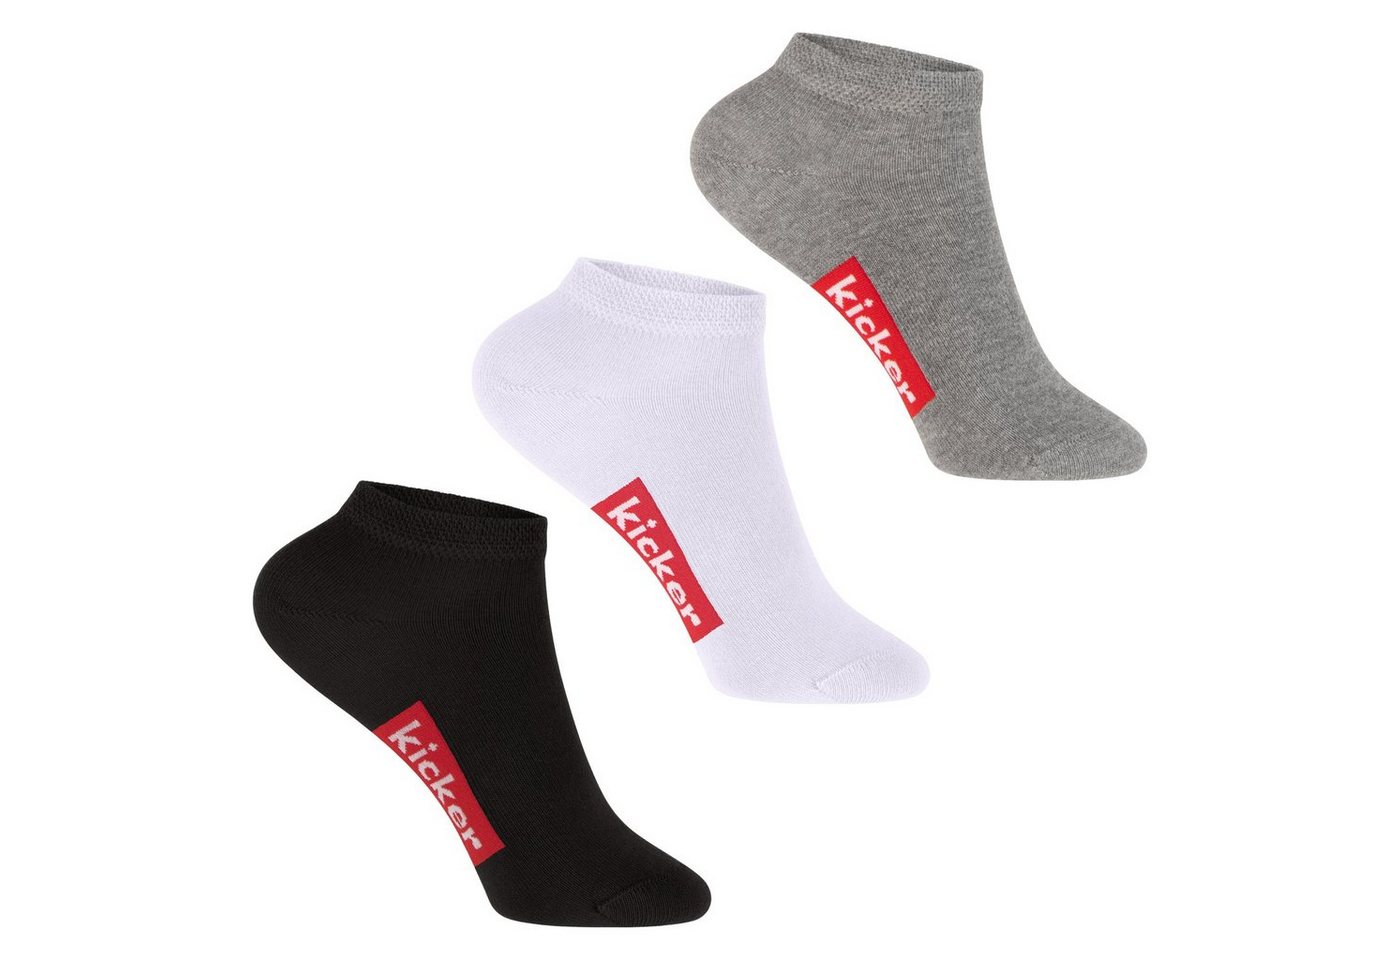 Kicker Kurzsocken kicker Kinder Sneaker Socken (3 Paar) Schwarz Weiß Grau 27-30 von Kicker